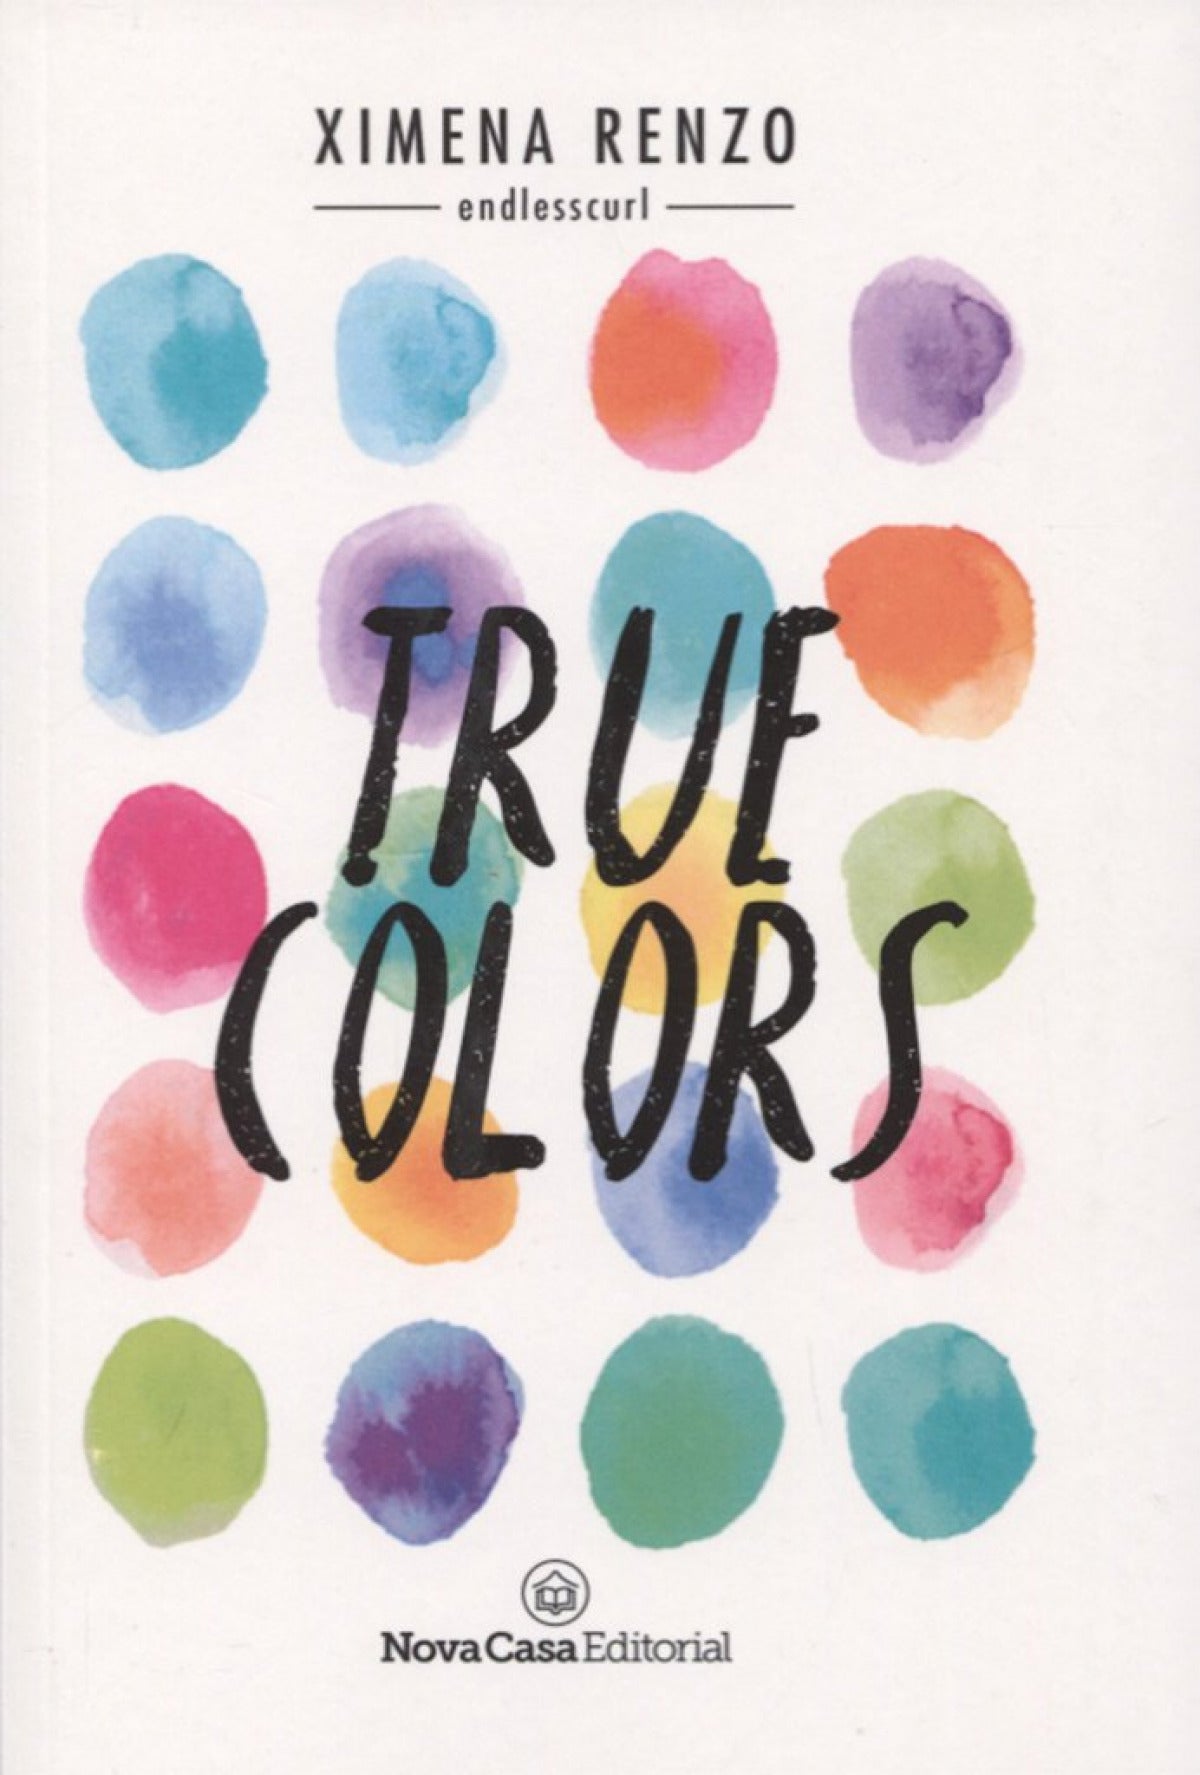 True colors - Ximena Alejandra / Renzo Zambrano - Sarasvati Librería